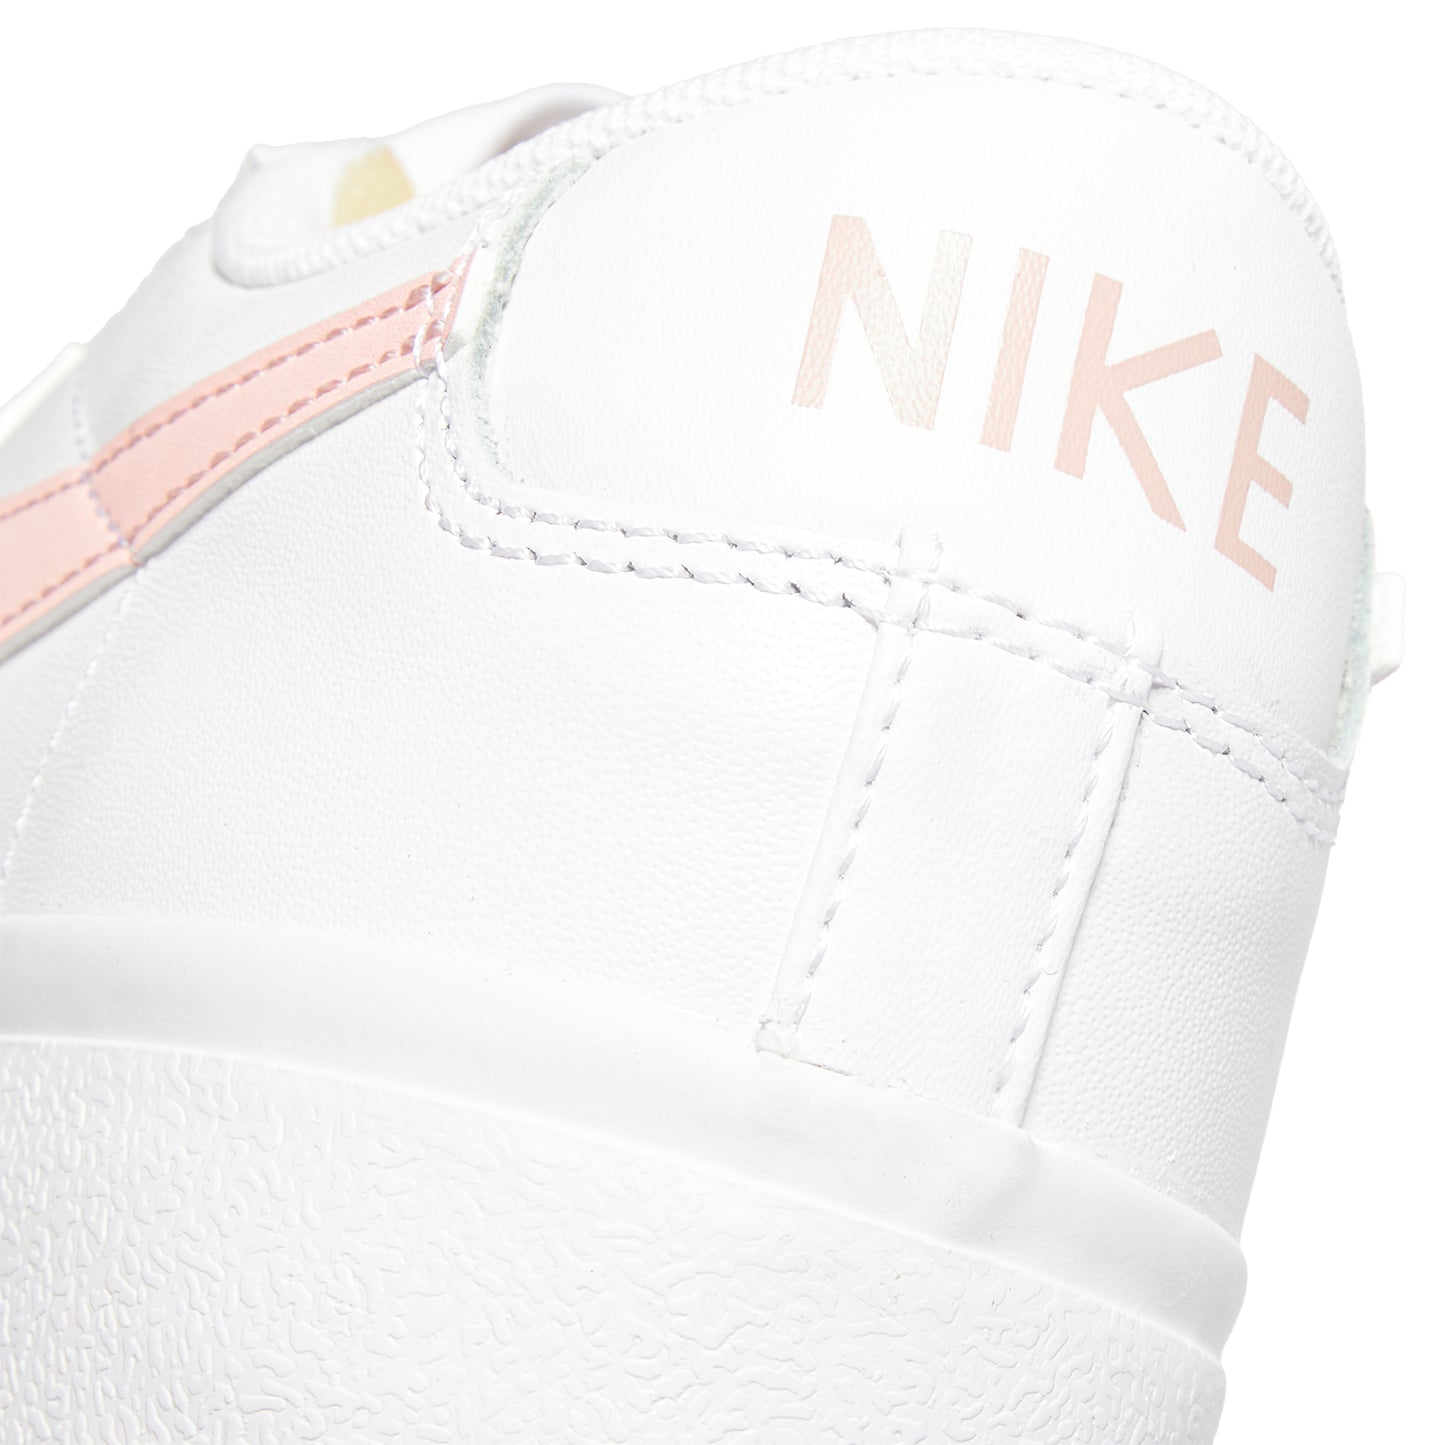 Nike Womens Blazer Low Platform (White/Pink Glaze/Summit White/Black)